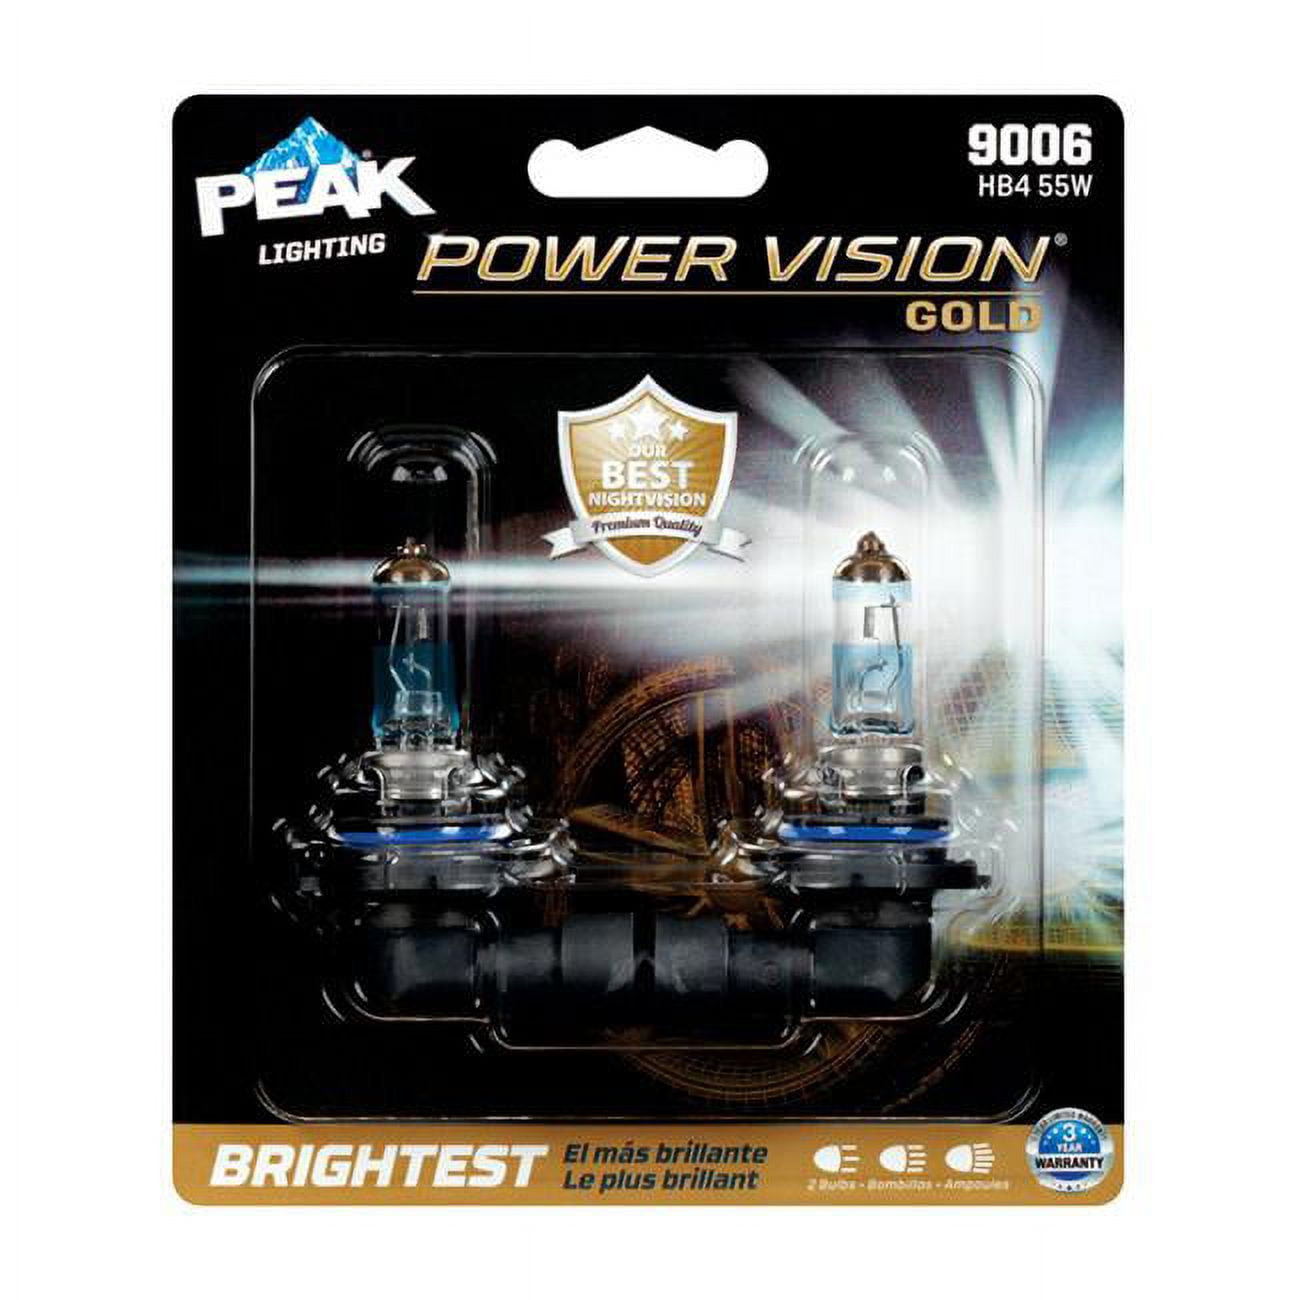 8020178 Power Vision Gold 12.8 V Halogen T4 Automotive Bulb - Hb4 55w - Pack Of 2